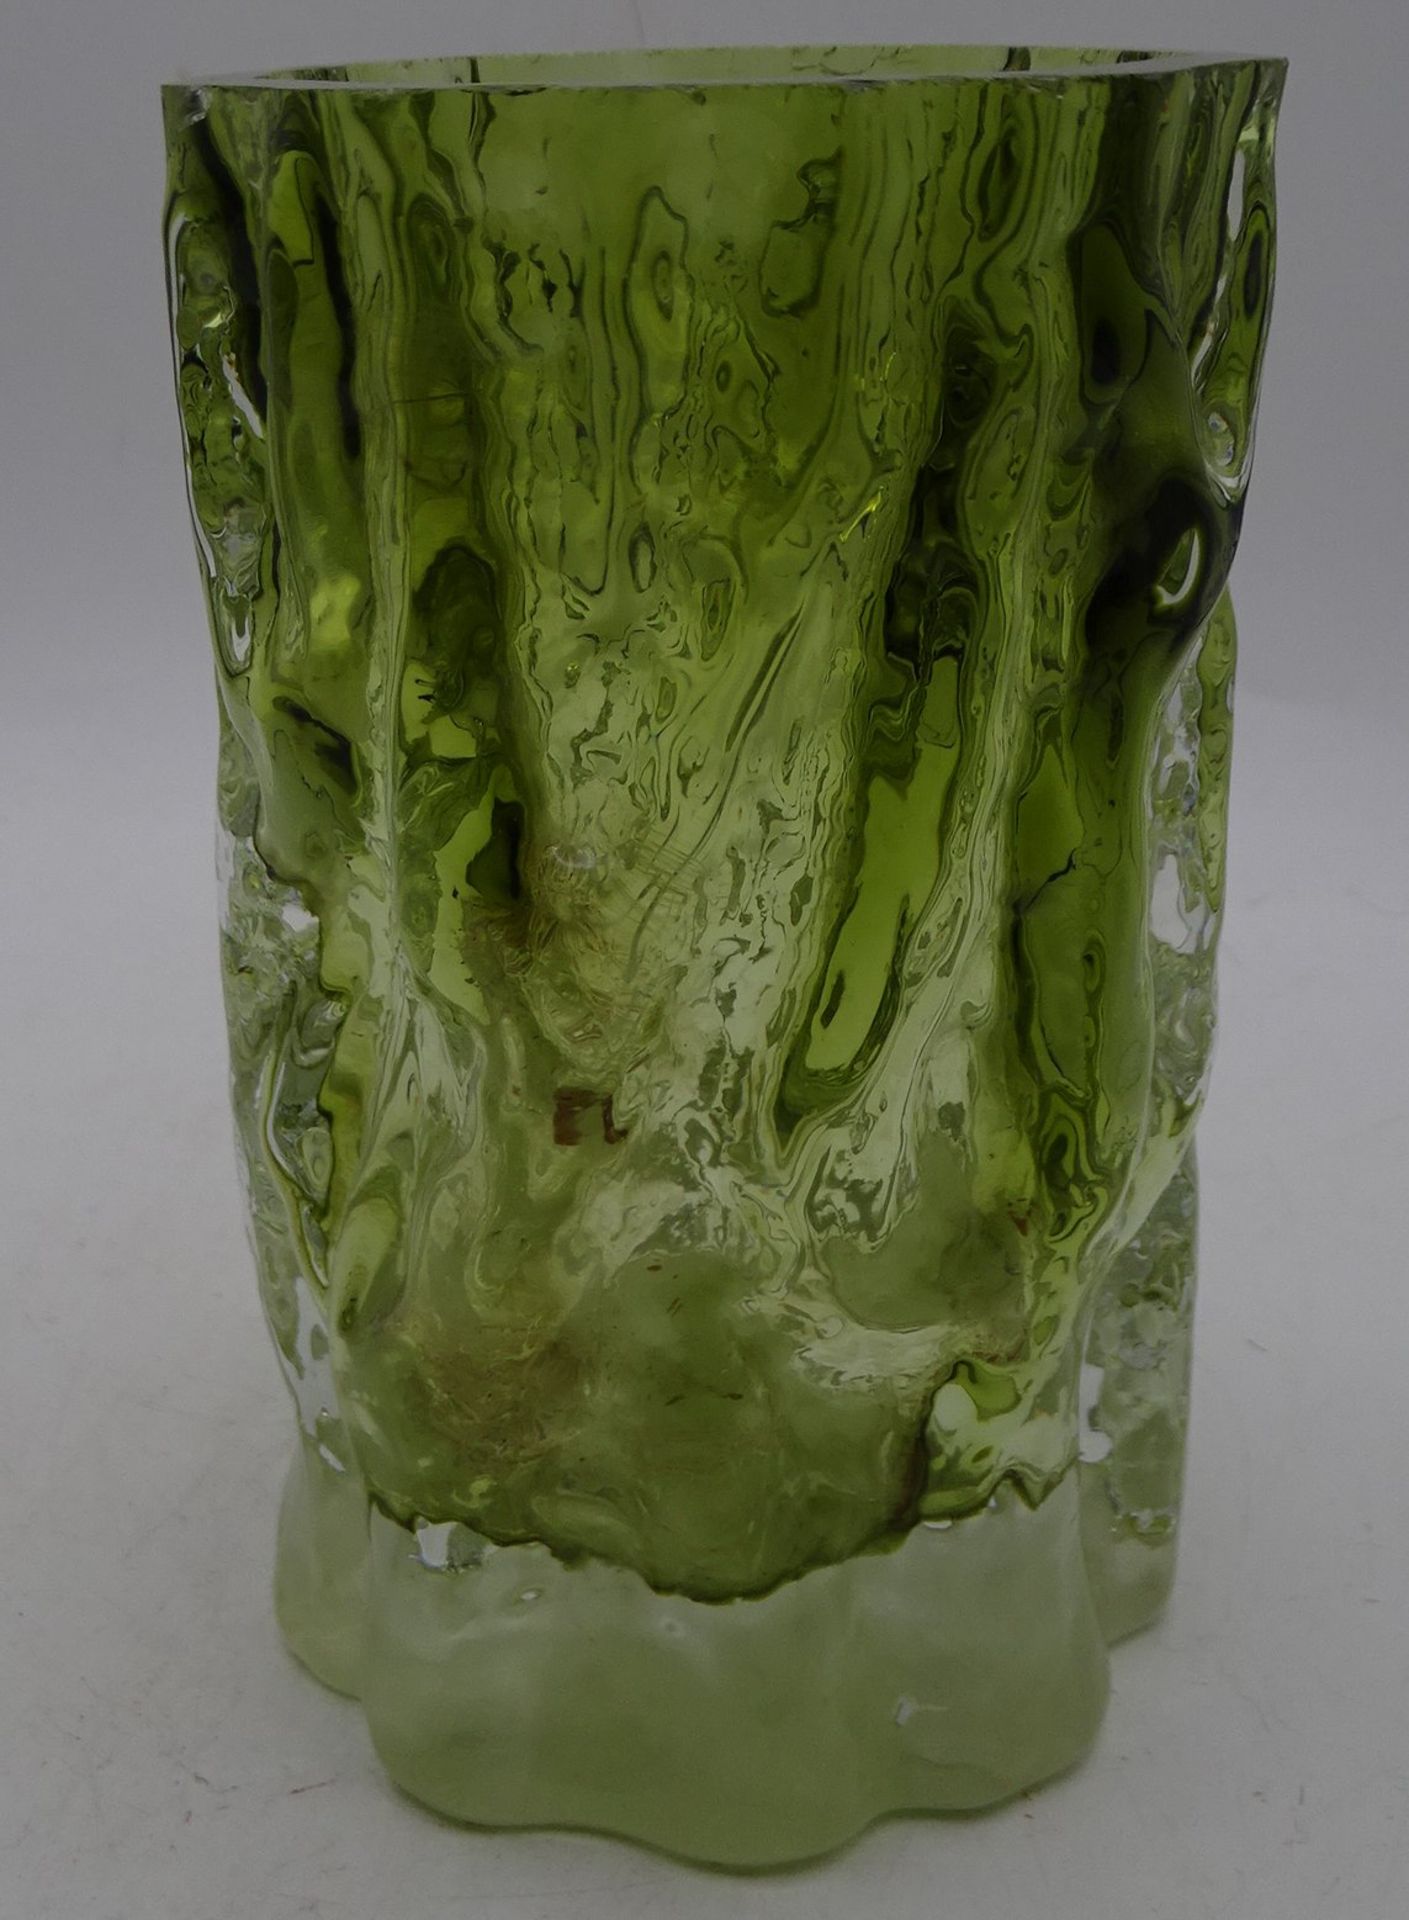 grün/klare dicke Kunstglasvase, H-13 cm, D-8 cm, Rand kl. Abplatzer